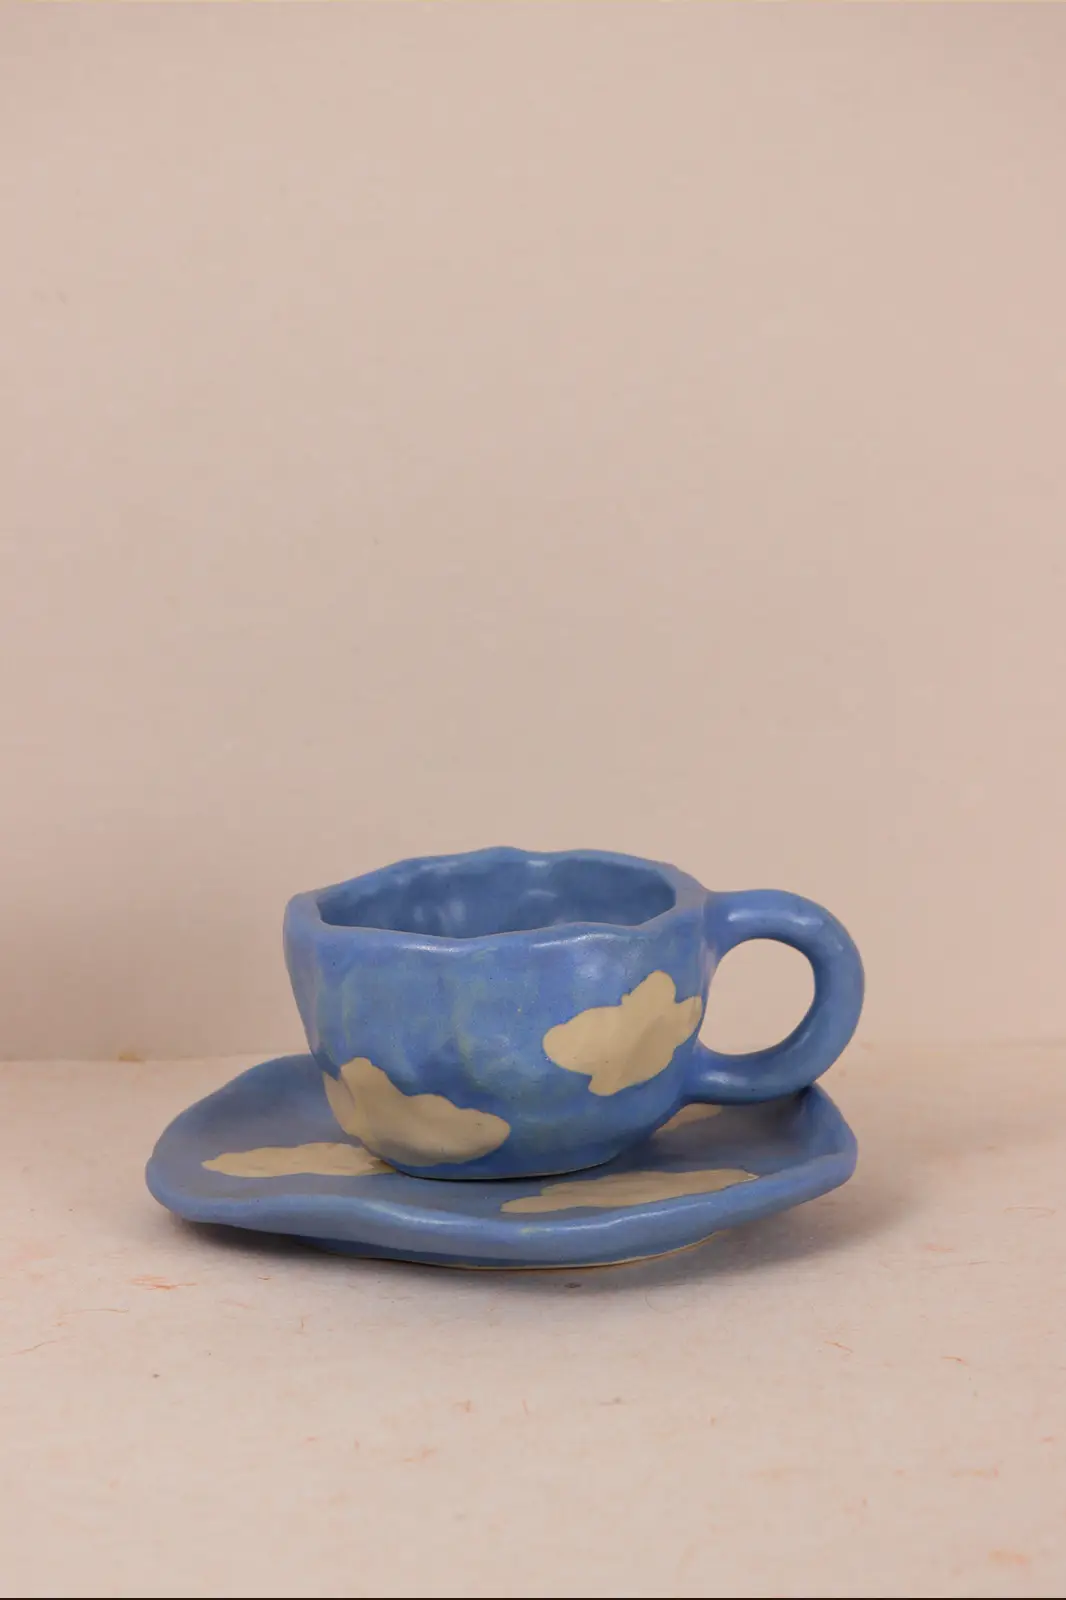 Blue ceramic cloud mug with saucer, coffee mug with saucer, coffee cup set with saucer, ceramic cup set, sustainable coffee mugs, handmade coffee mugs, coffee mugs, Toh, Sepia stories